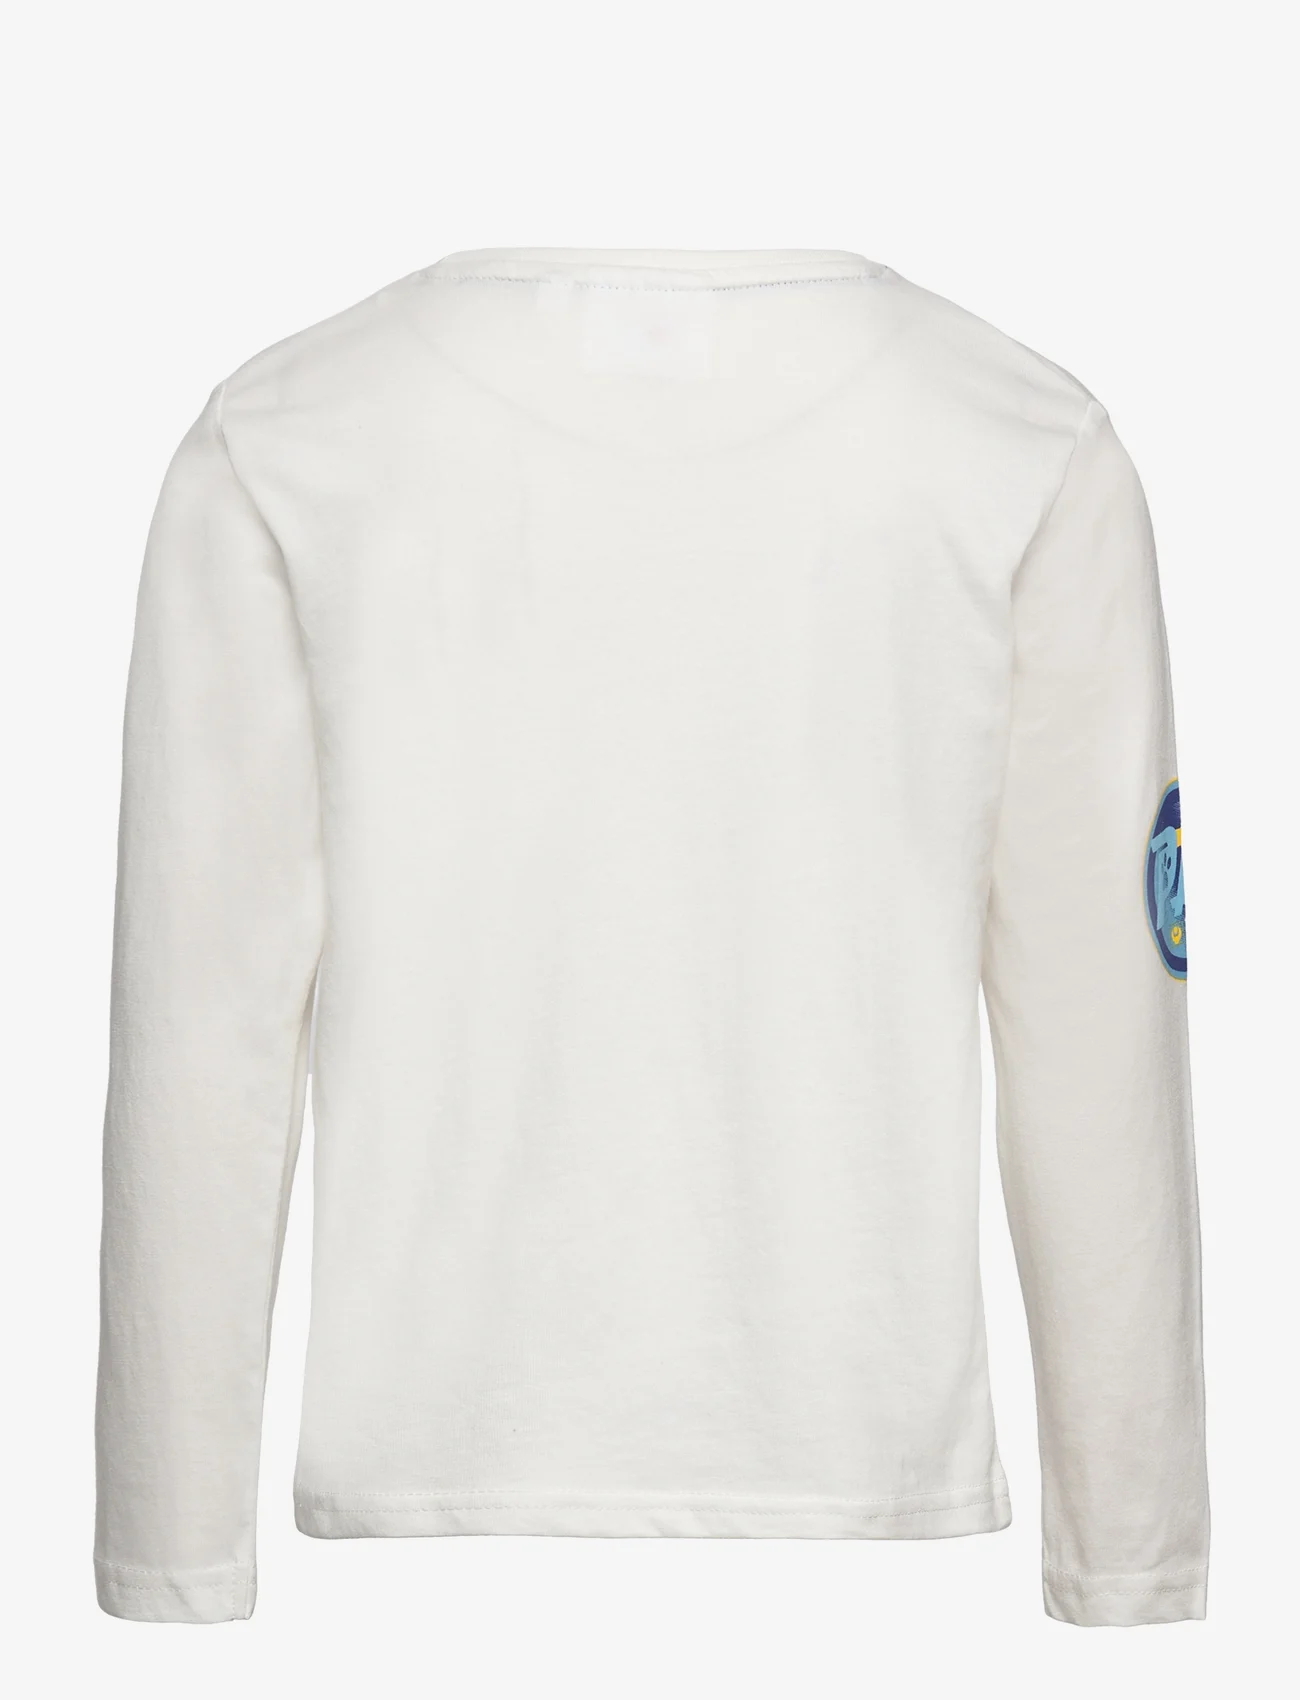 Paw Patrol - LONG-SLEEVED T-SHIRT - langærmede t-shirts - off white - 1